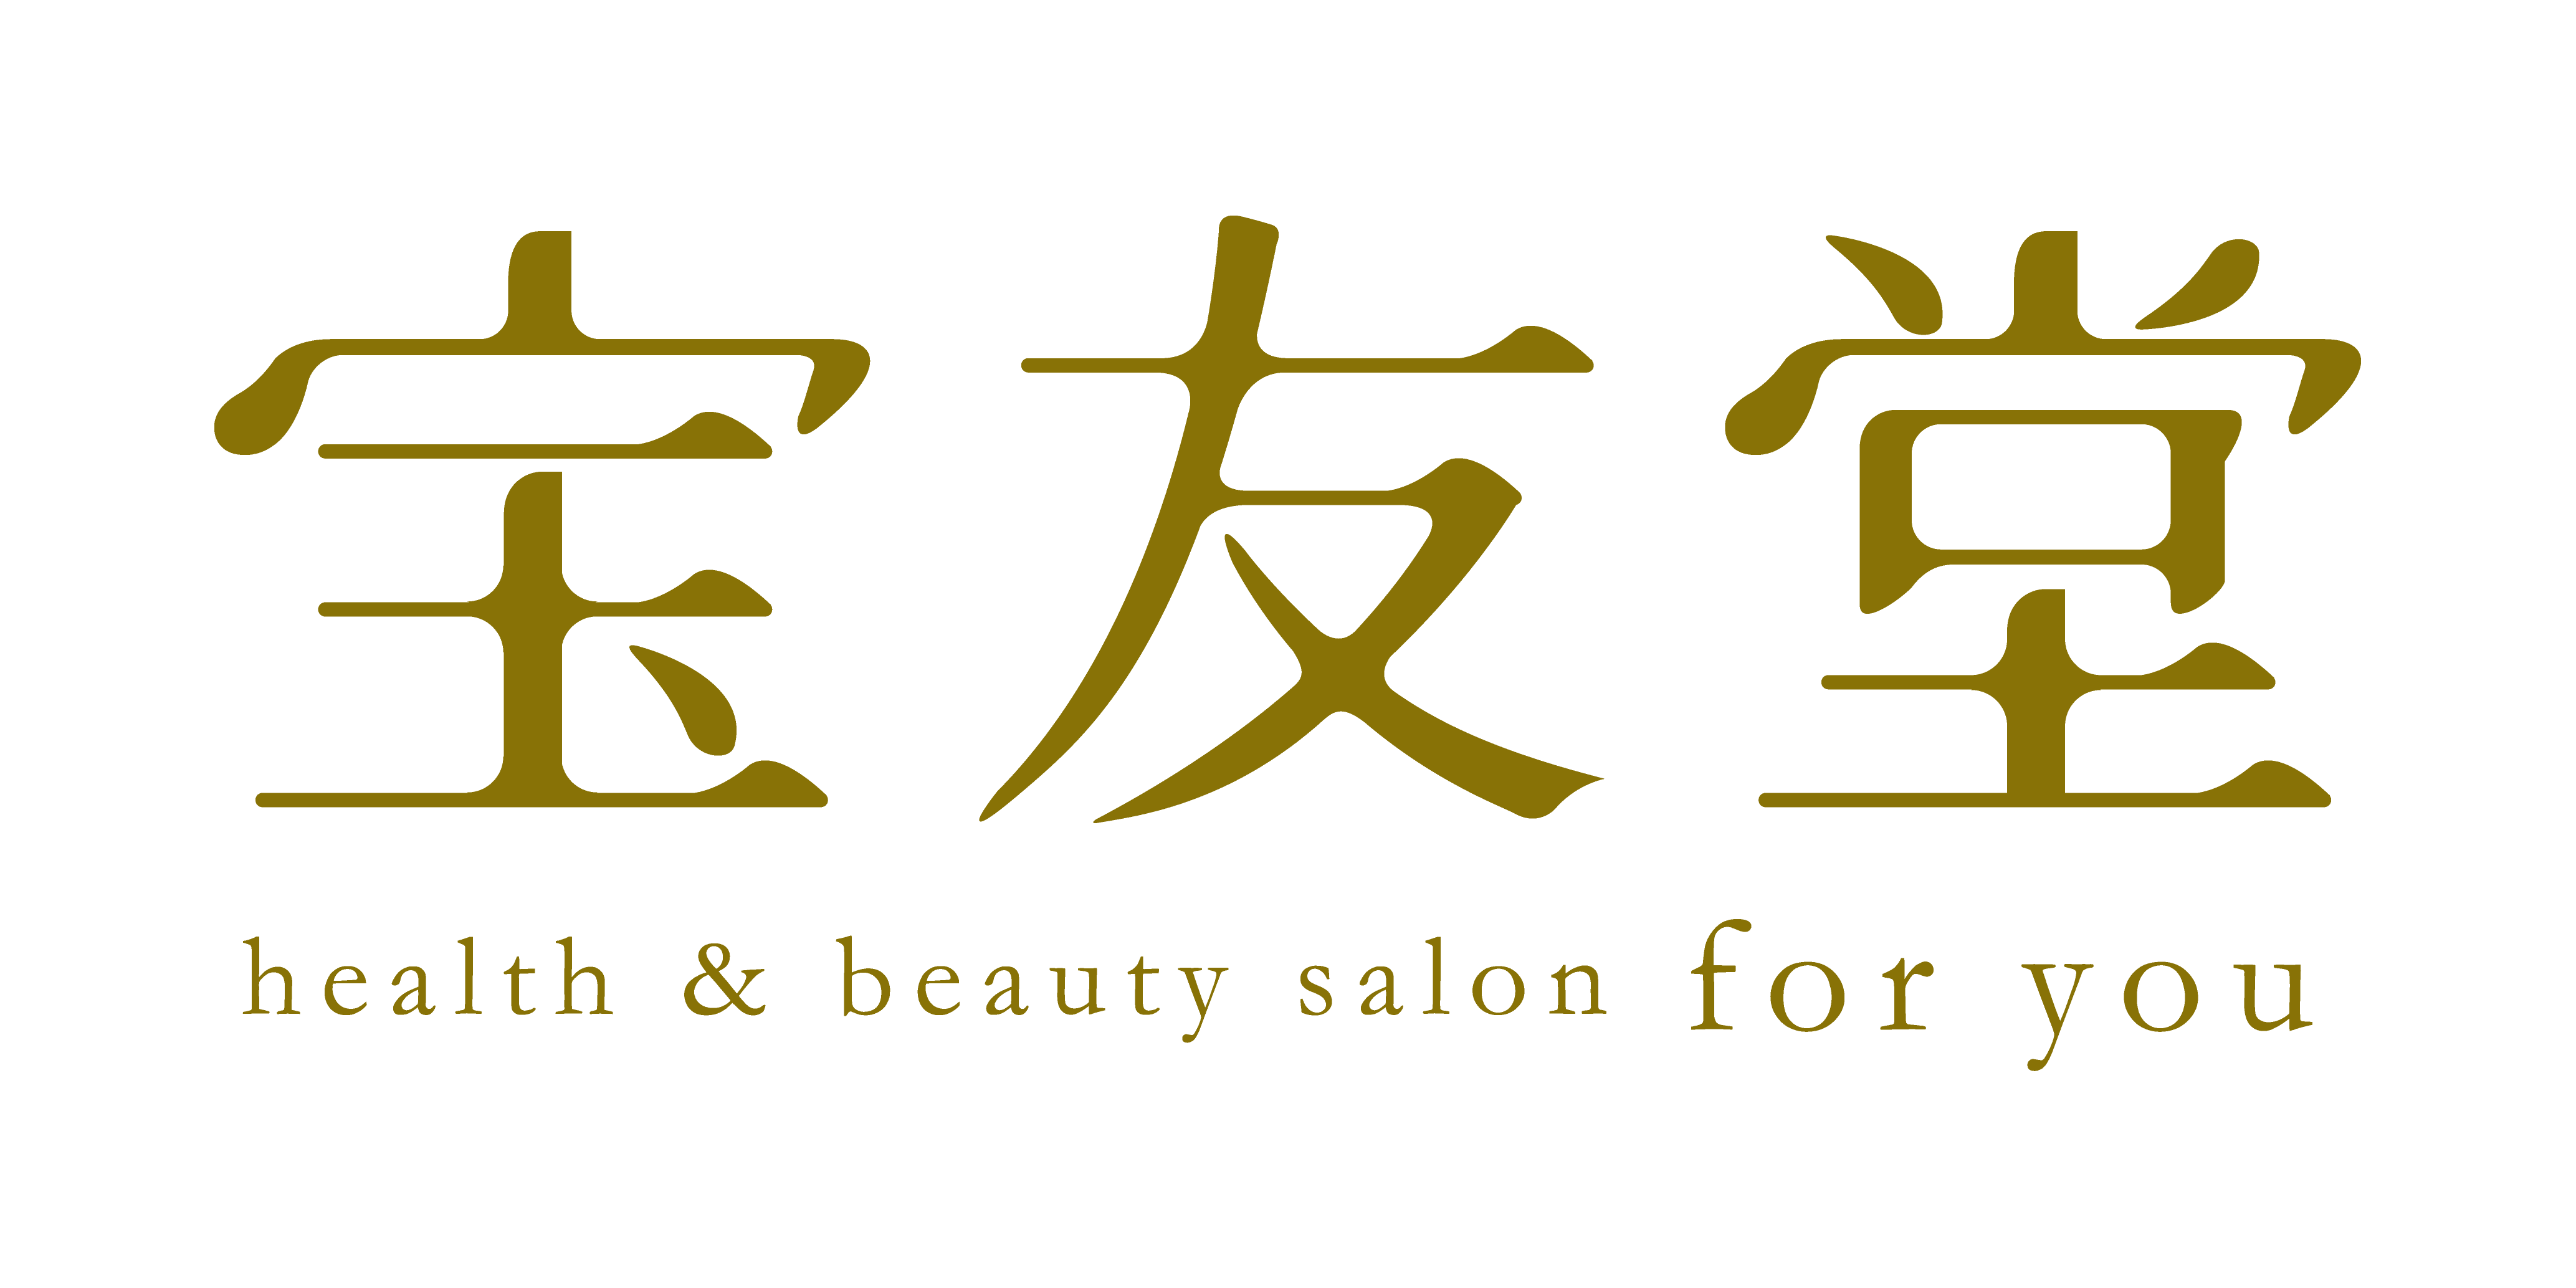 health & beauty salon for you　宝友堂